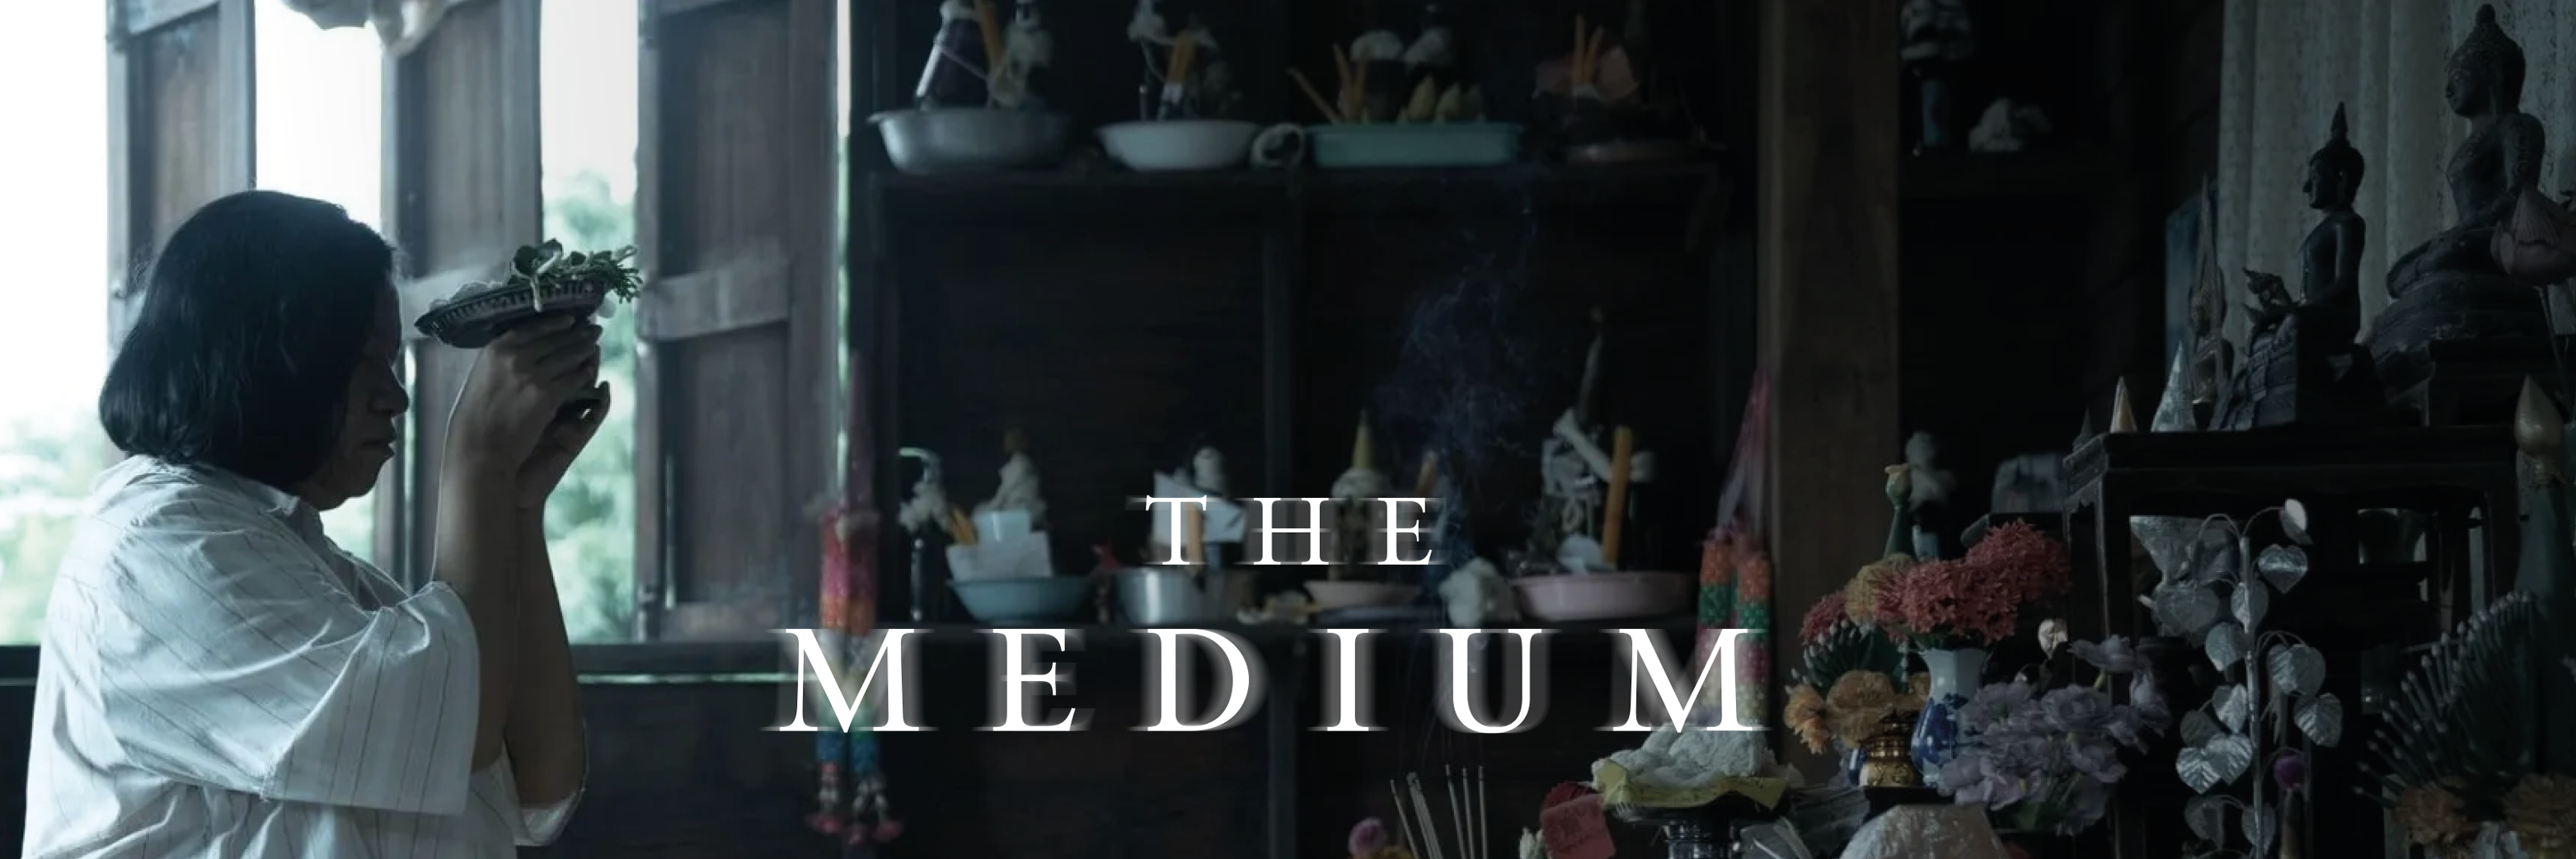 The medium